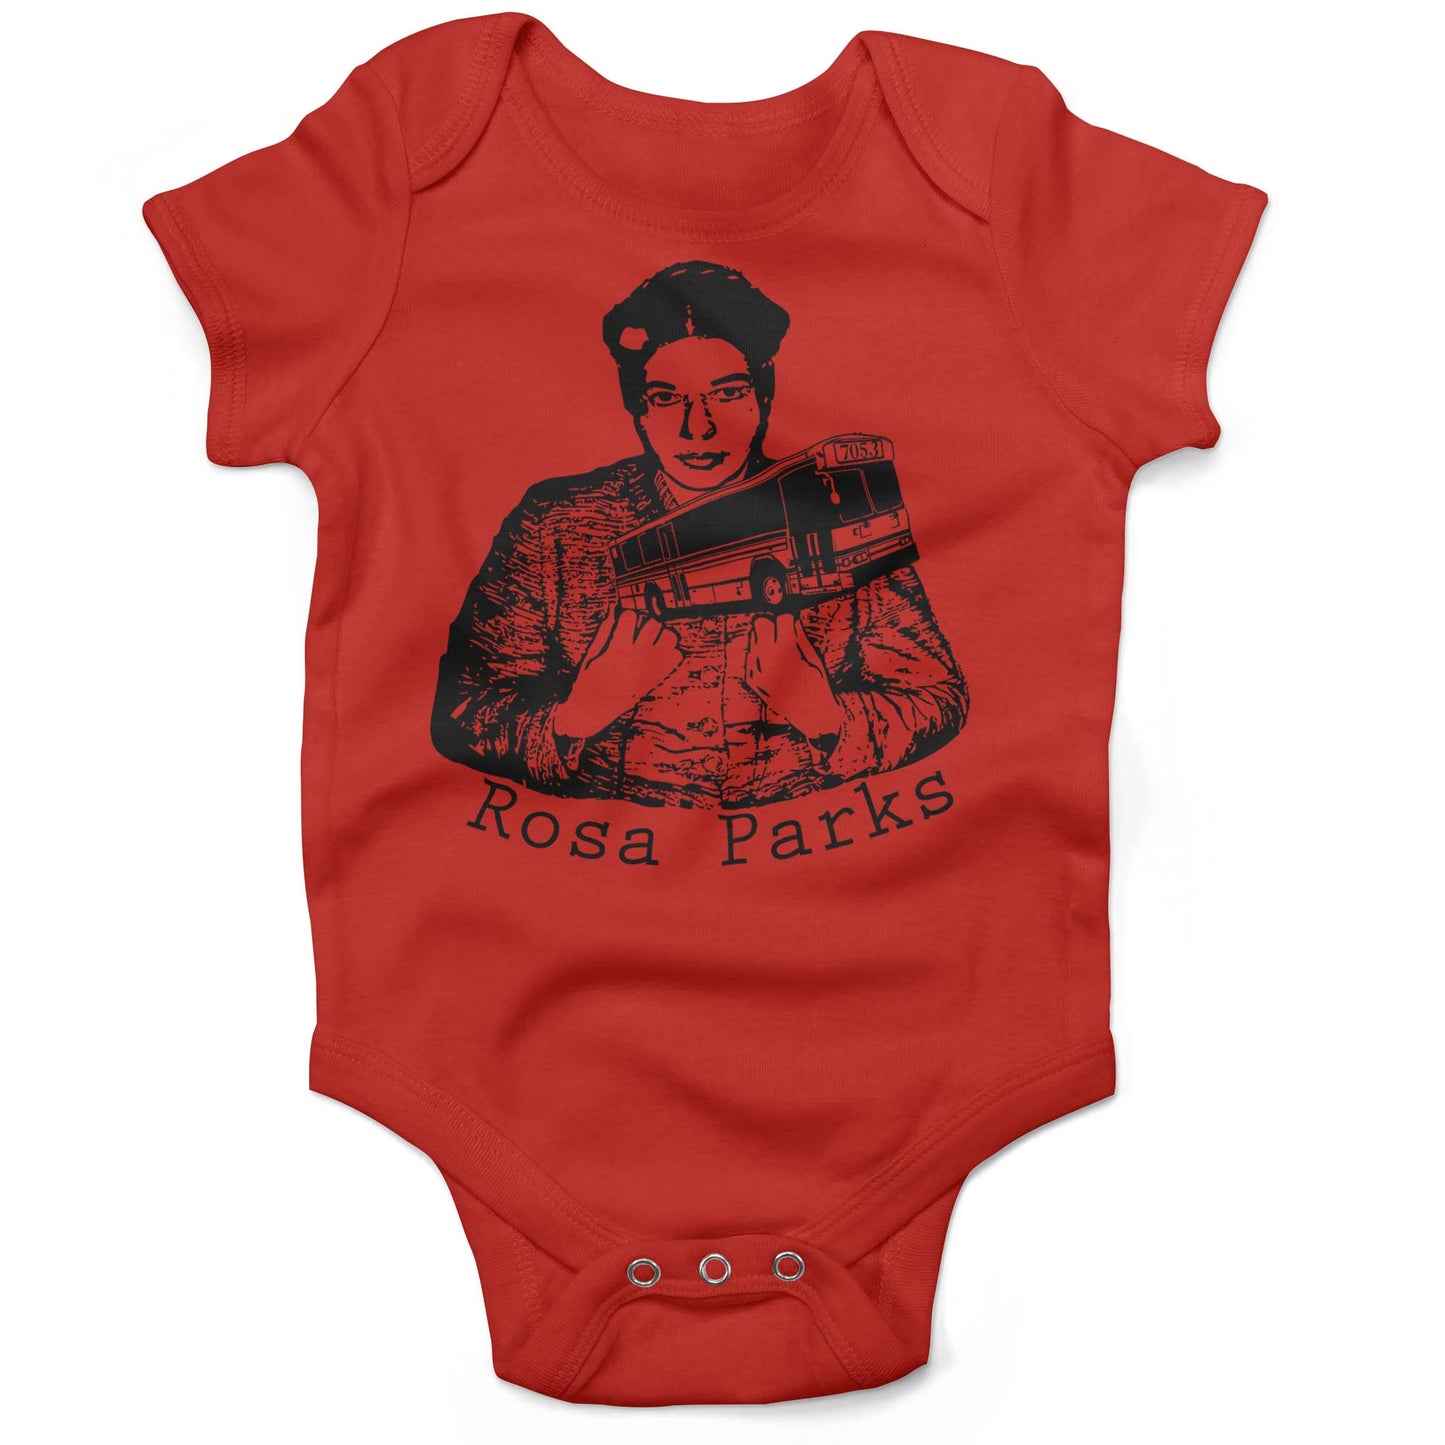 Rosa Parks Infant Bodysuit or Raglan Baby Tee-Organic Red-3-6 months